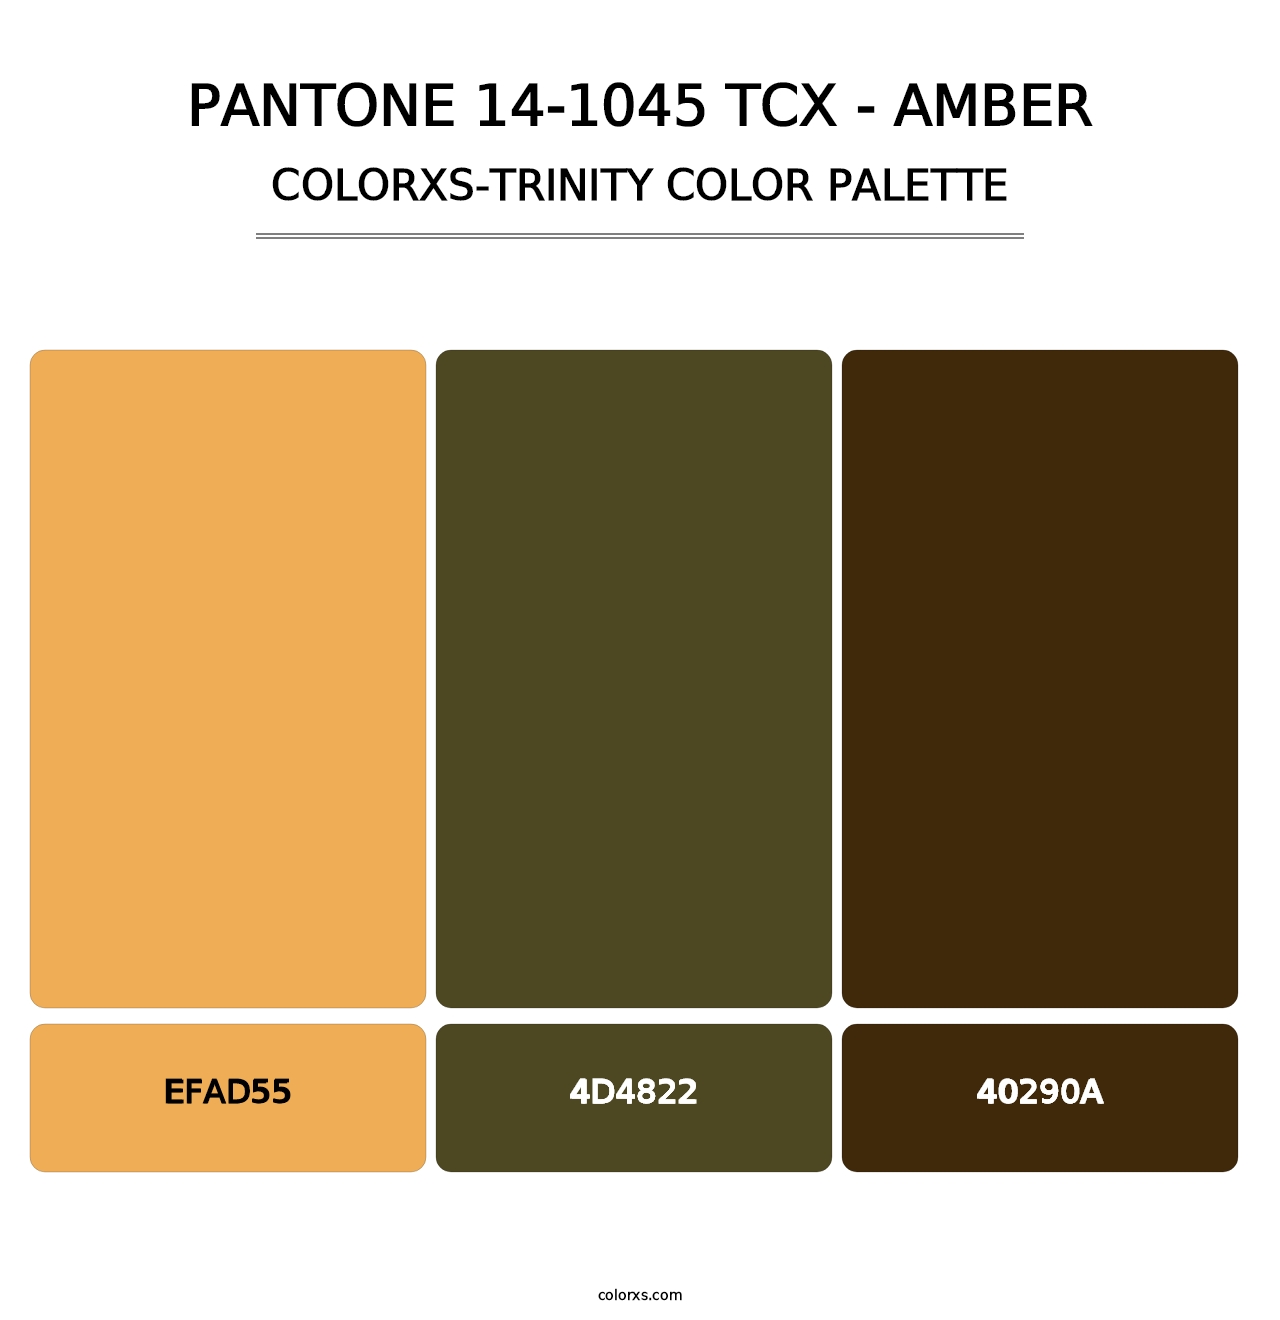 PANTONE 14-1045 TCX - Amber - Colorxs Trinity Palette